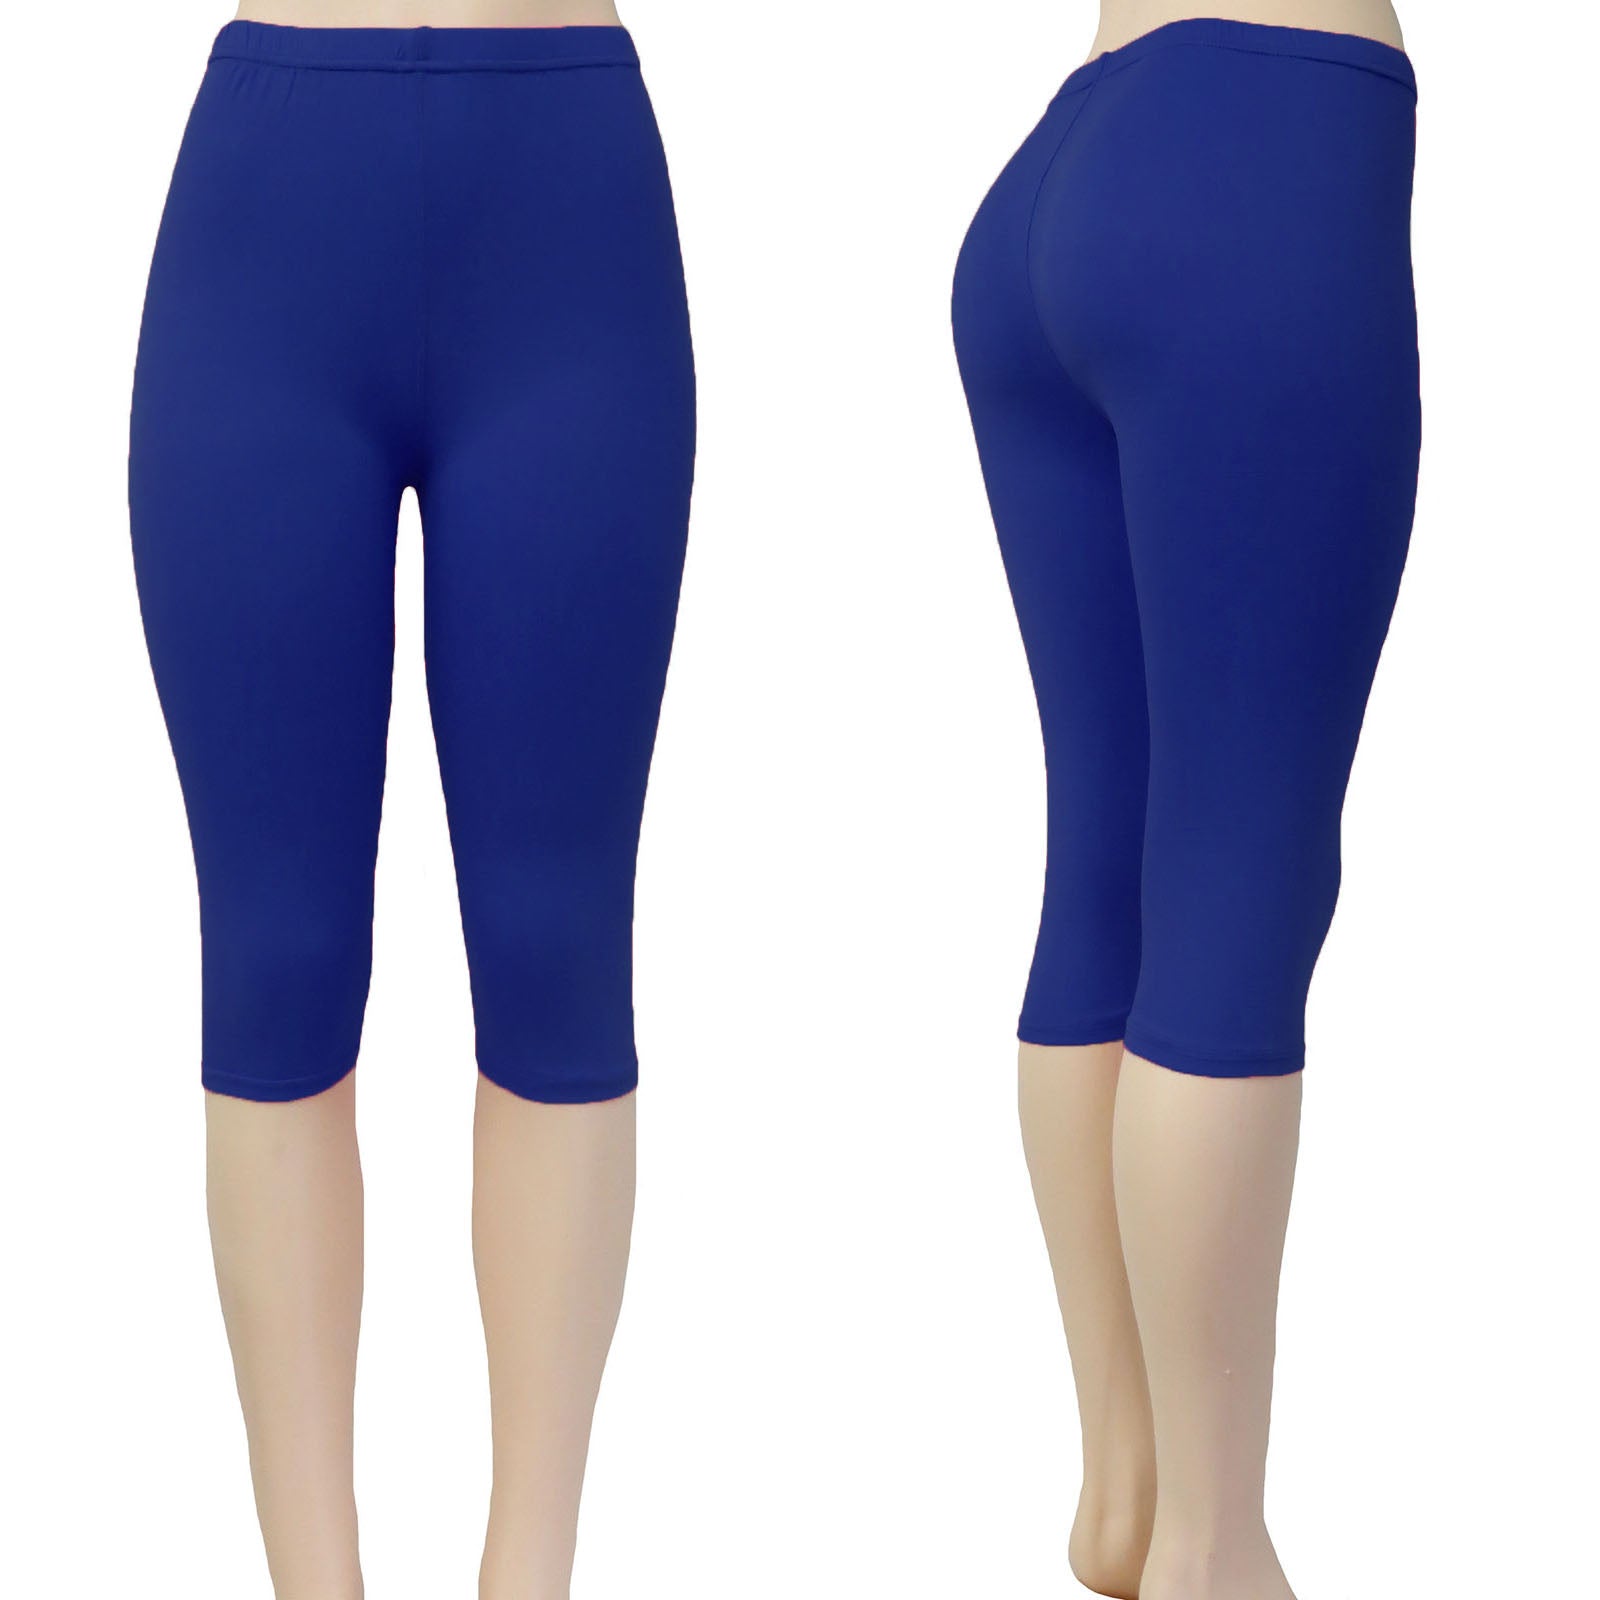 wholesale capri leggings solid color royal blue ap732 vanessa